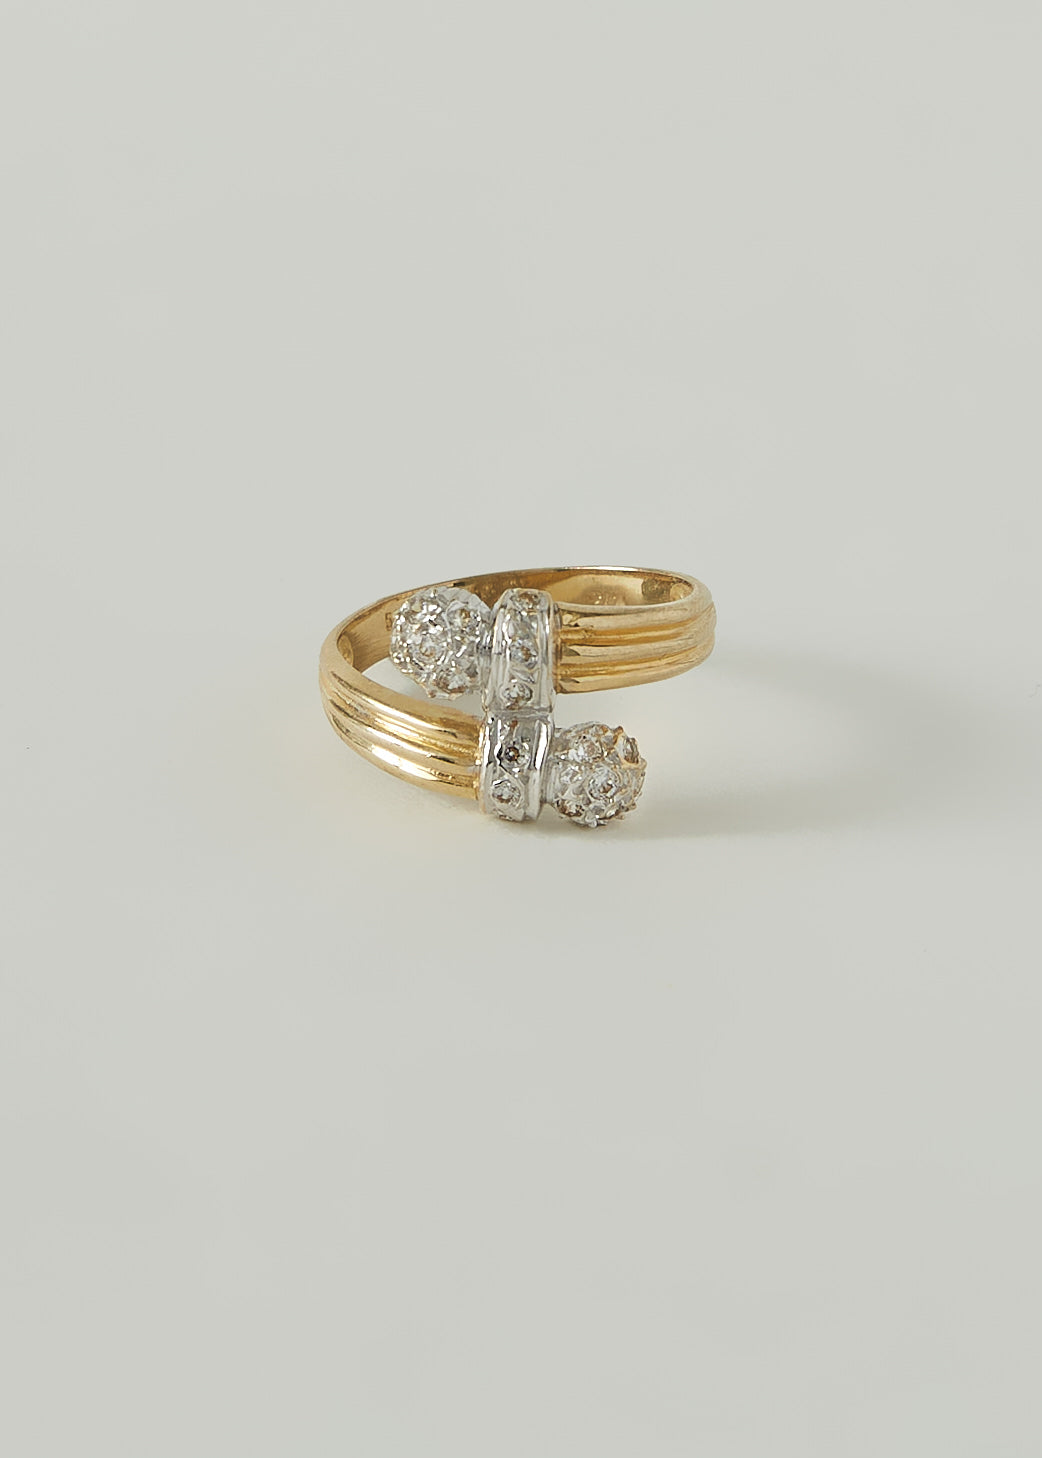 alt="Vintage Overlapping Round Diamond Ring"